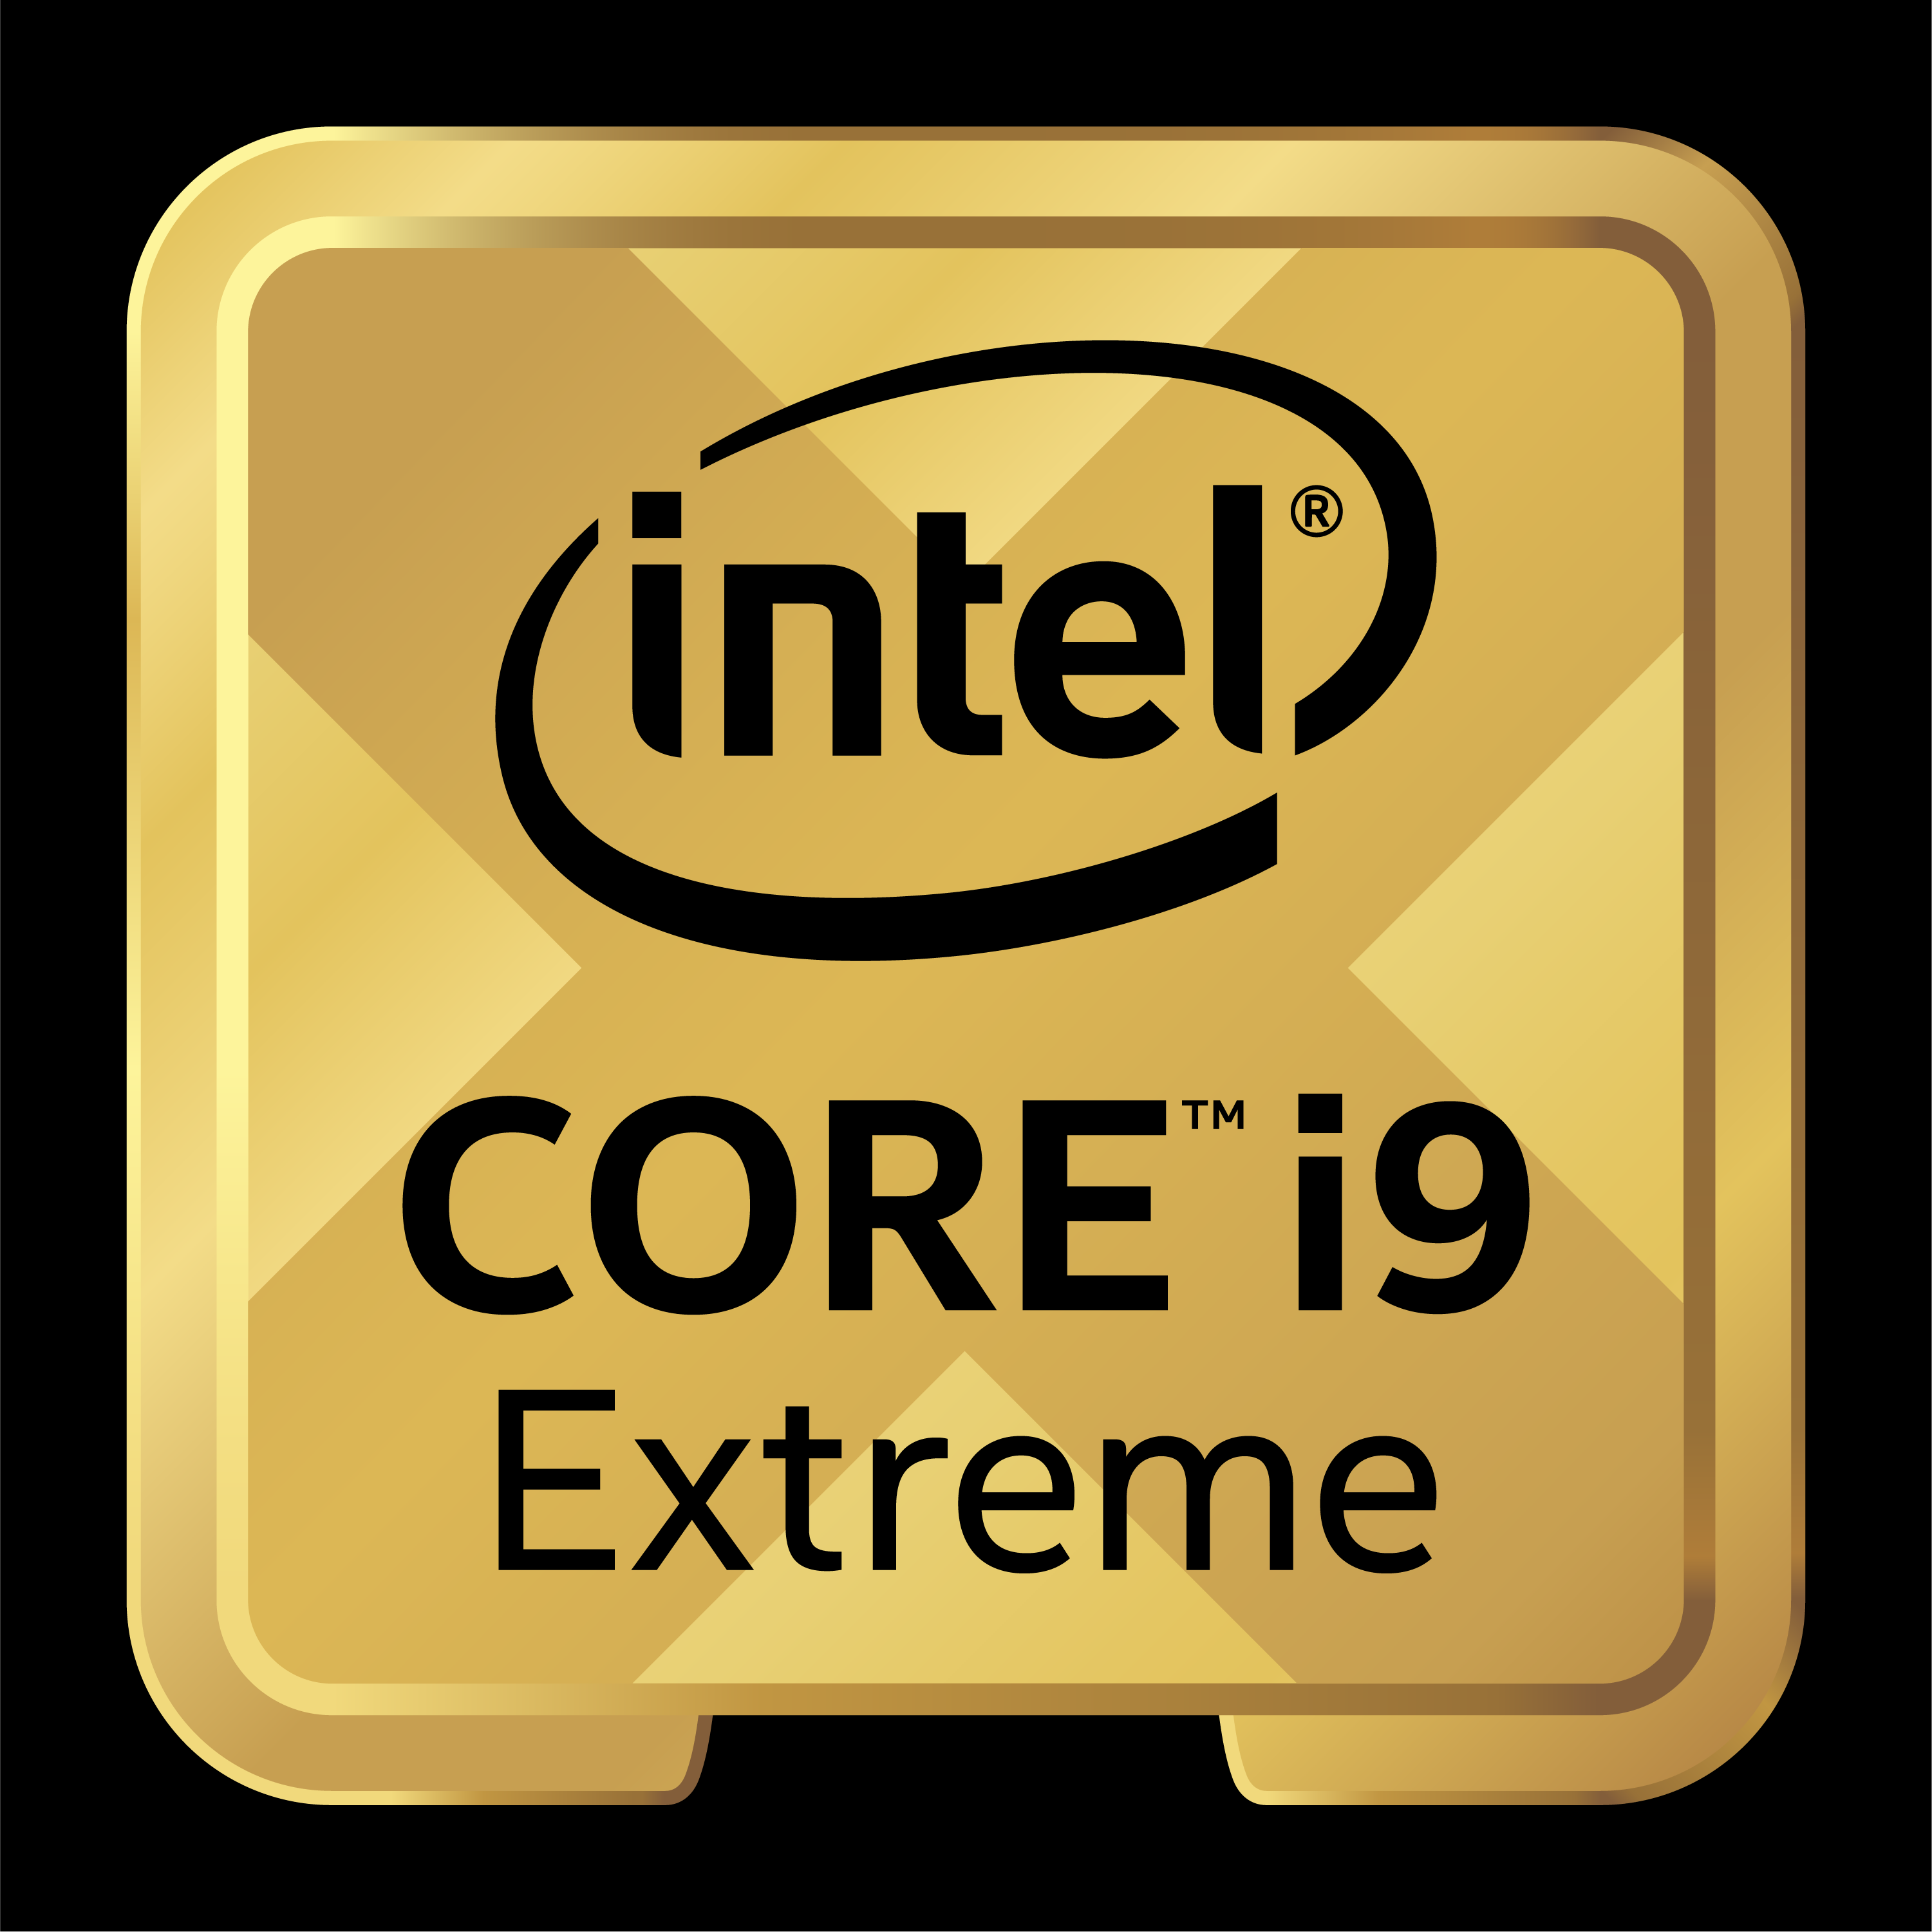 Модель процессора intel core. Процессор Intel Core i9-10980xe extreme Edition. Процессор Intel Core i9-10920x. Процессор Intel Core i9-10980xe Box. Процессор Intel Core i9-10920x Box.